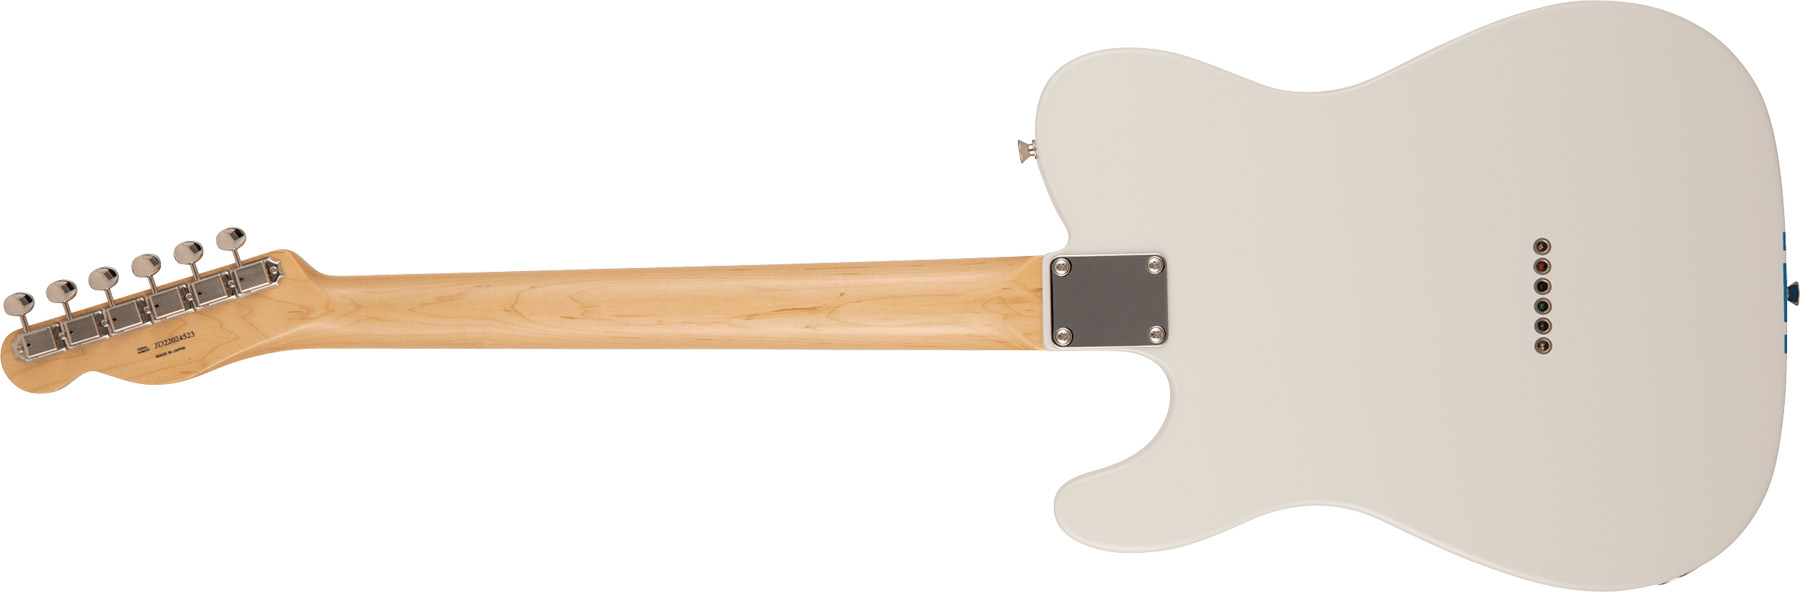 Fender Tele Traditional 60s Mij Jap 2s Ht Rw - Olympic White W/ Blue Competition Stripe - E-Gitarre in Teleform - Variation 1